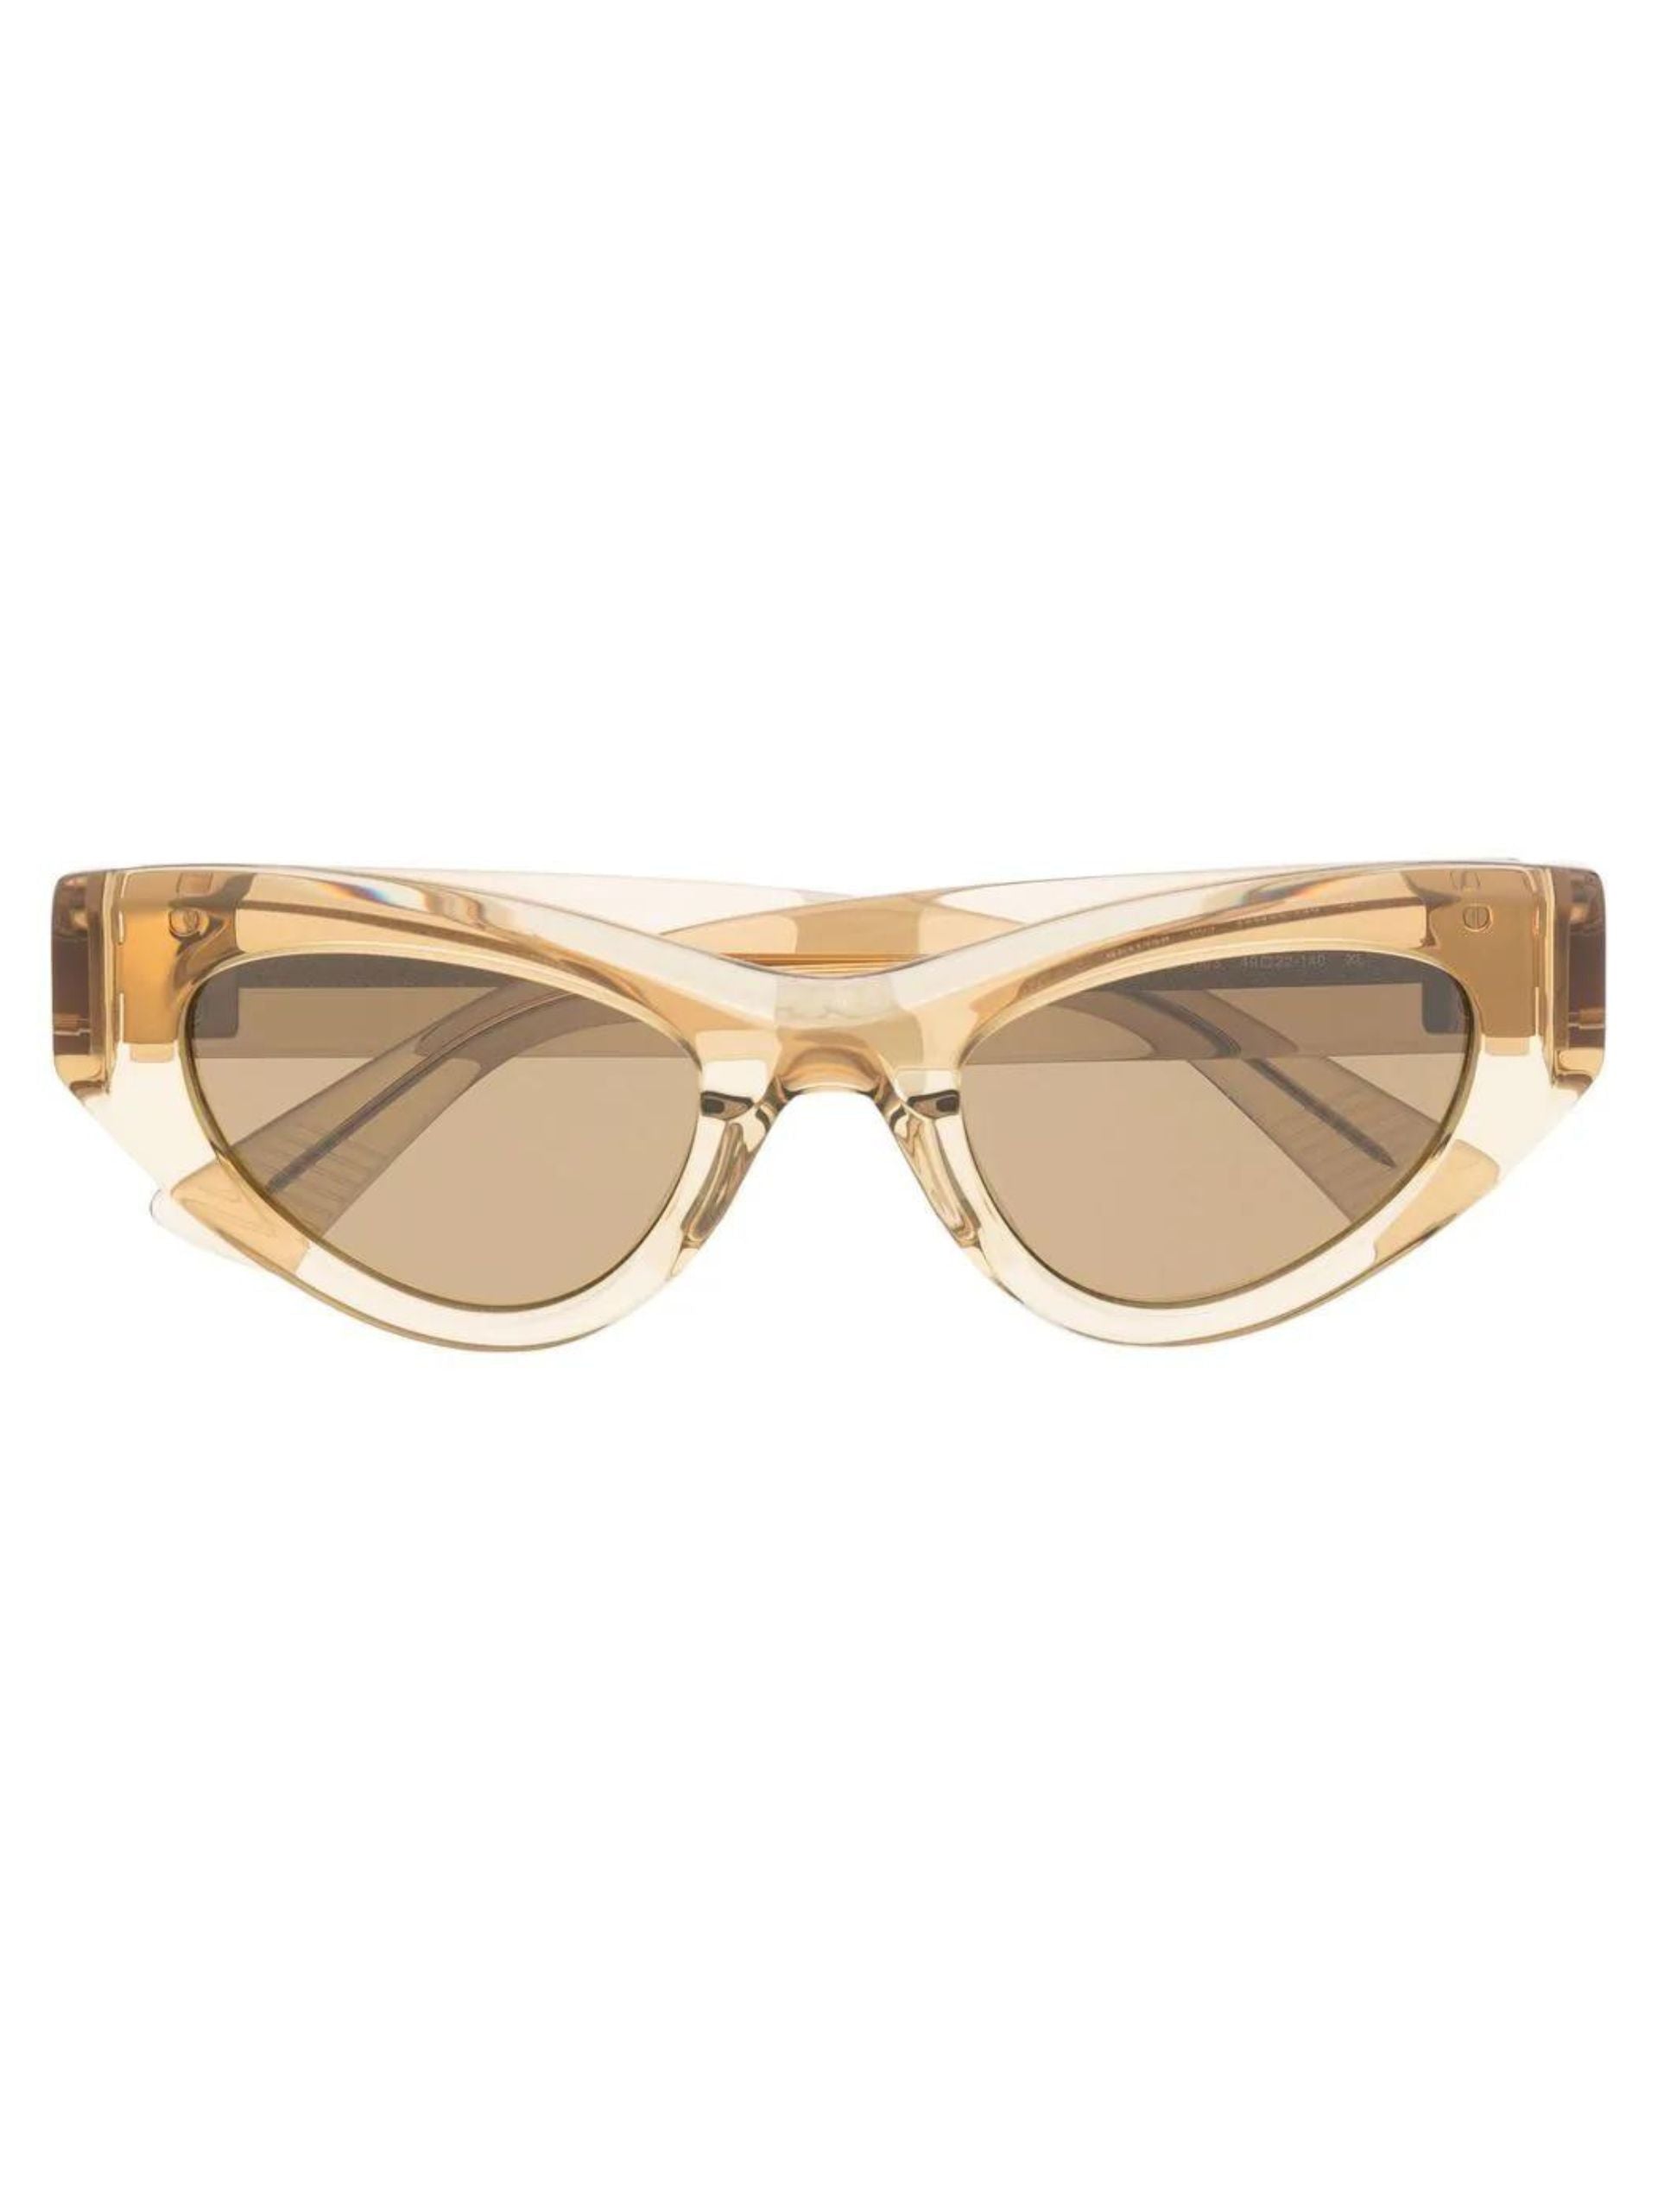 Bottega Veneta Cat Eye Sunglasses in Brown